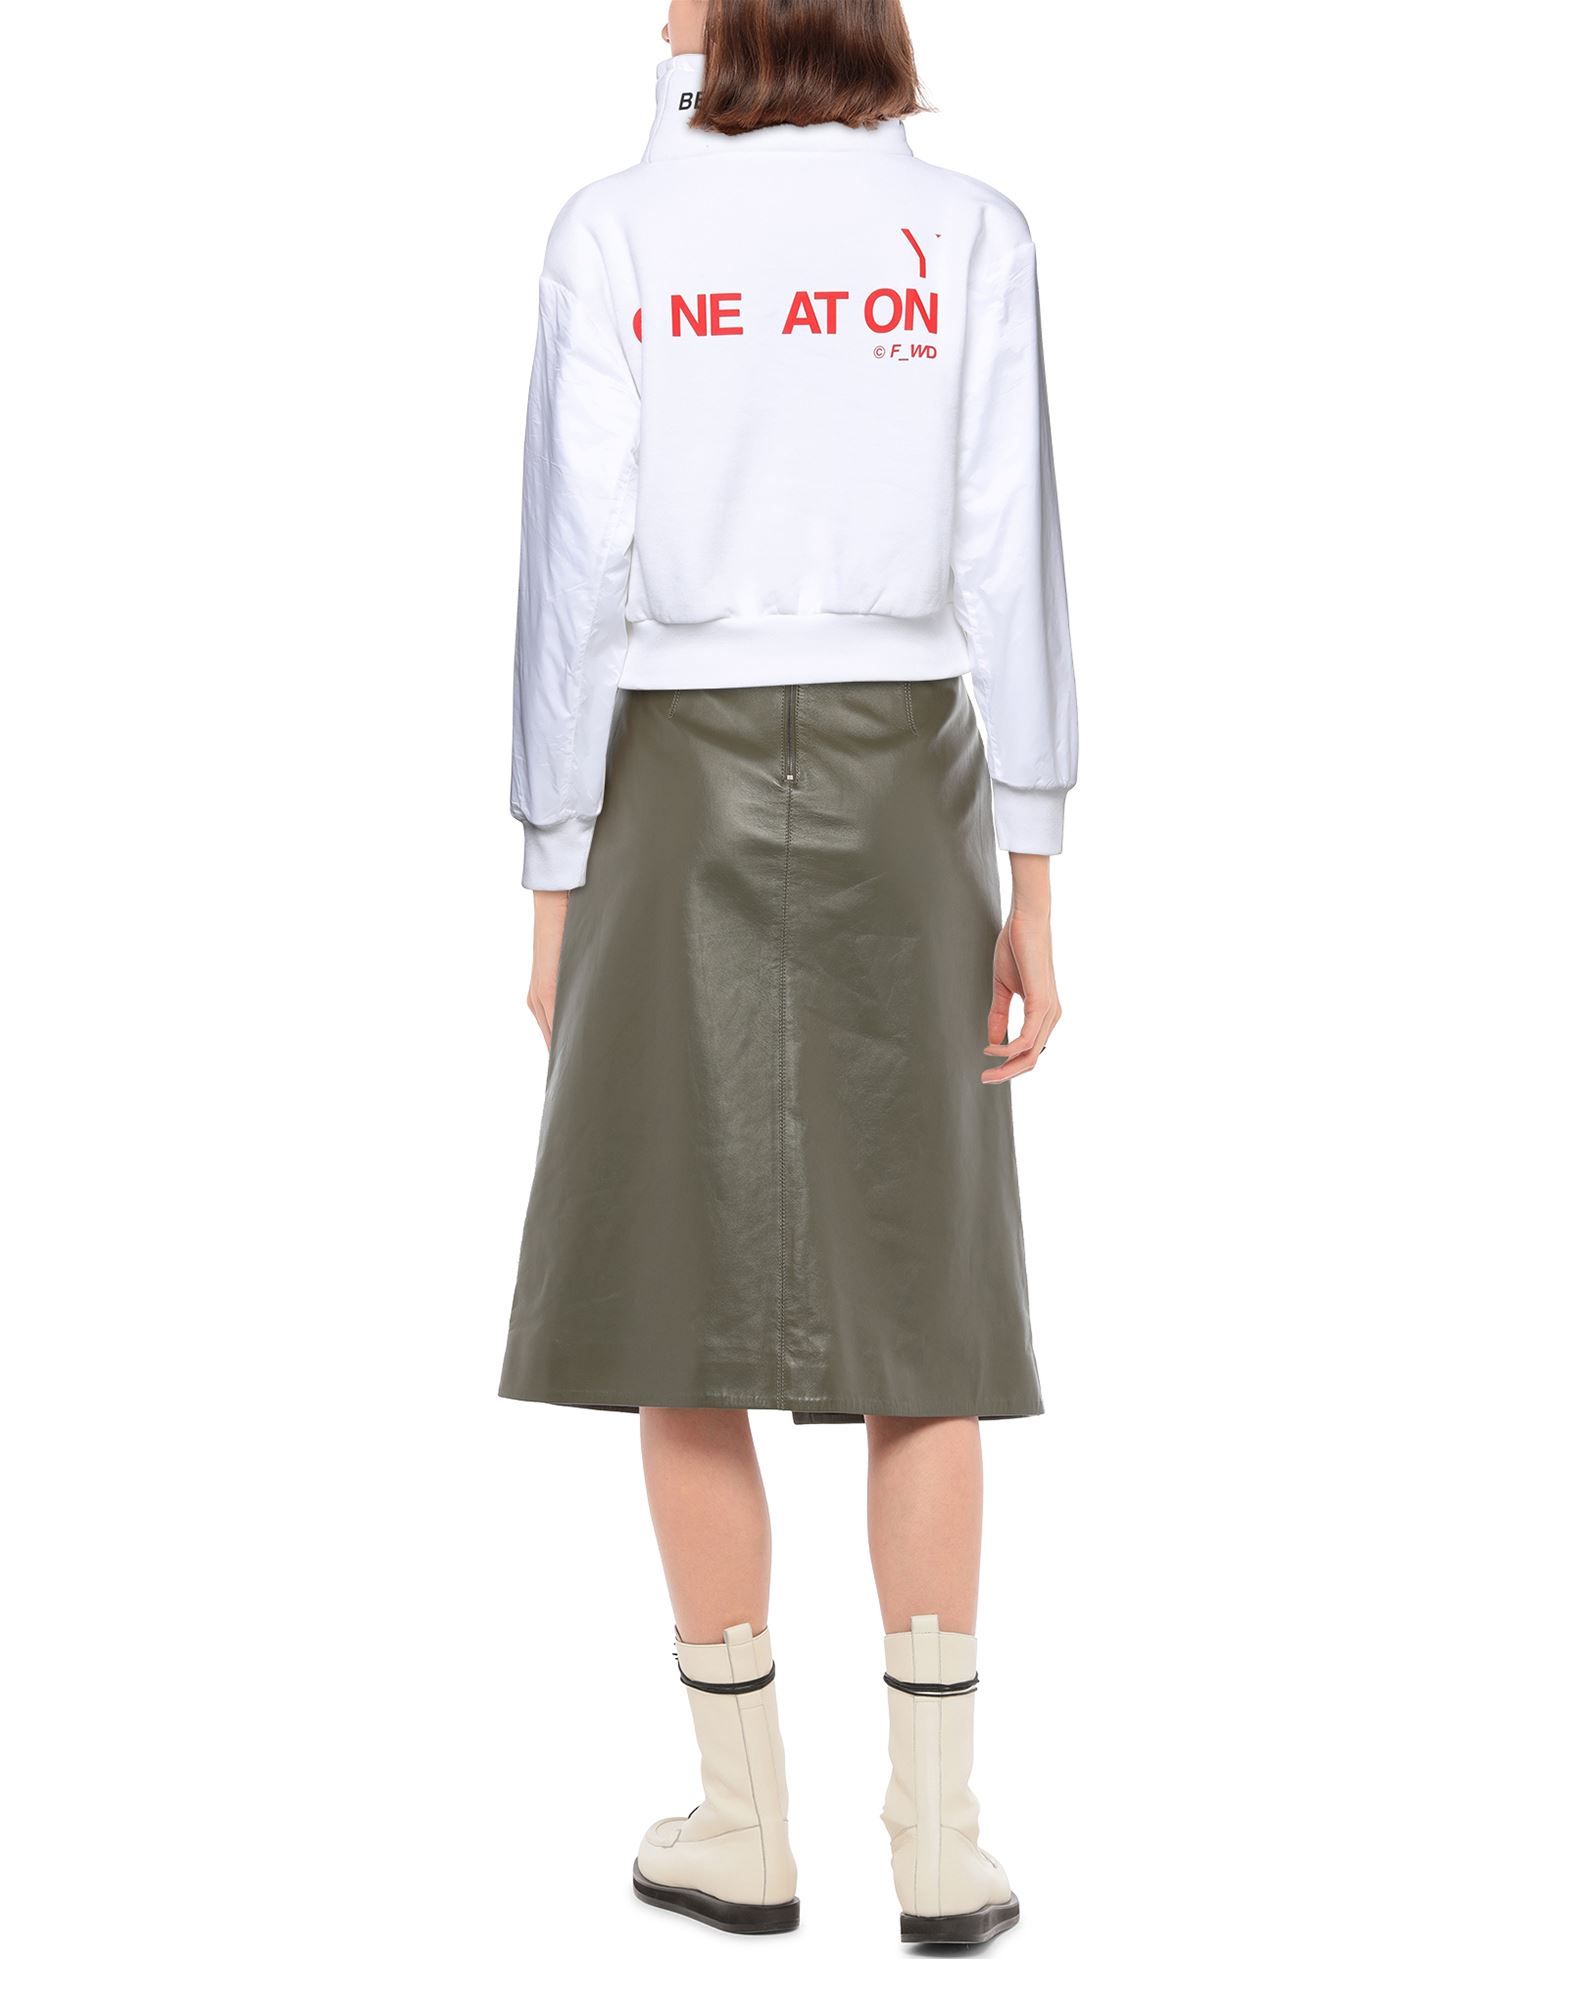 techno fabric, sweatshirt fleece, logo, solid colour with appliqués, turtleneck, long sleeves, no pockets